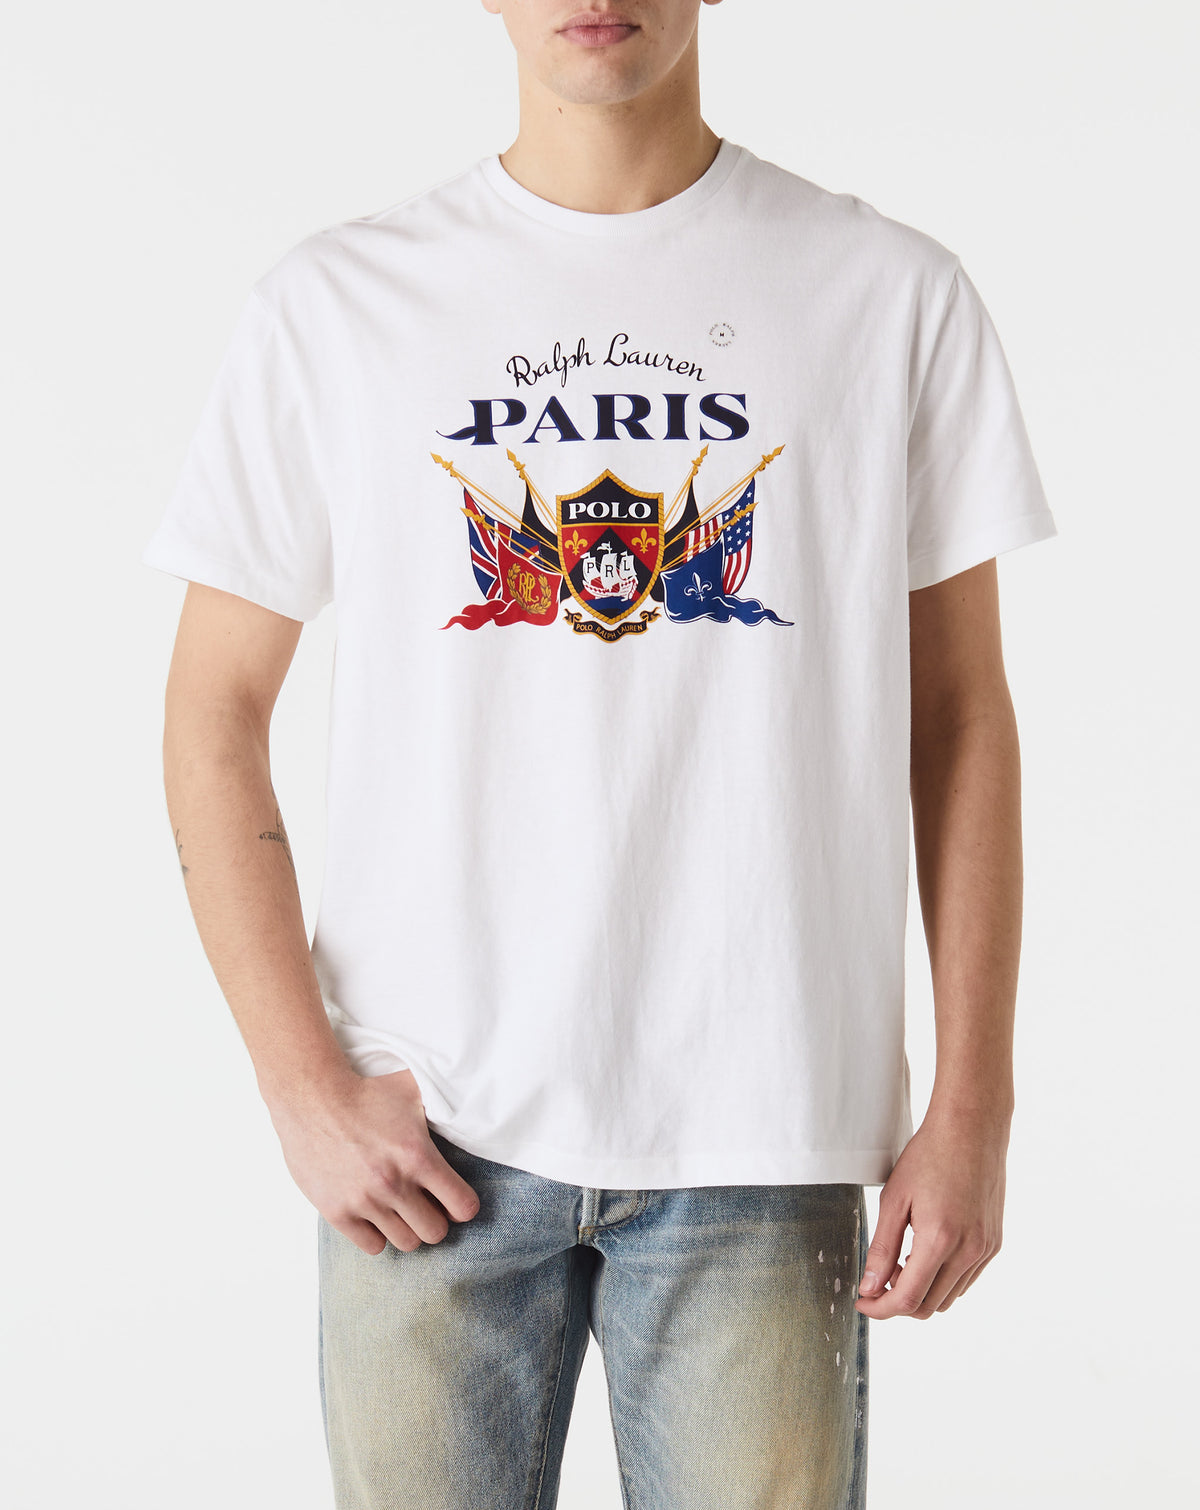 Polo Ralph Lauren Paris T-Shirt - Rule of Next Apparel